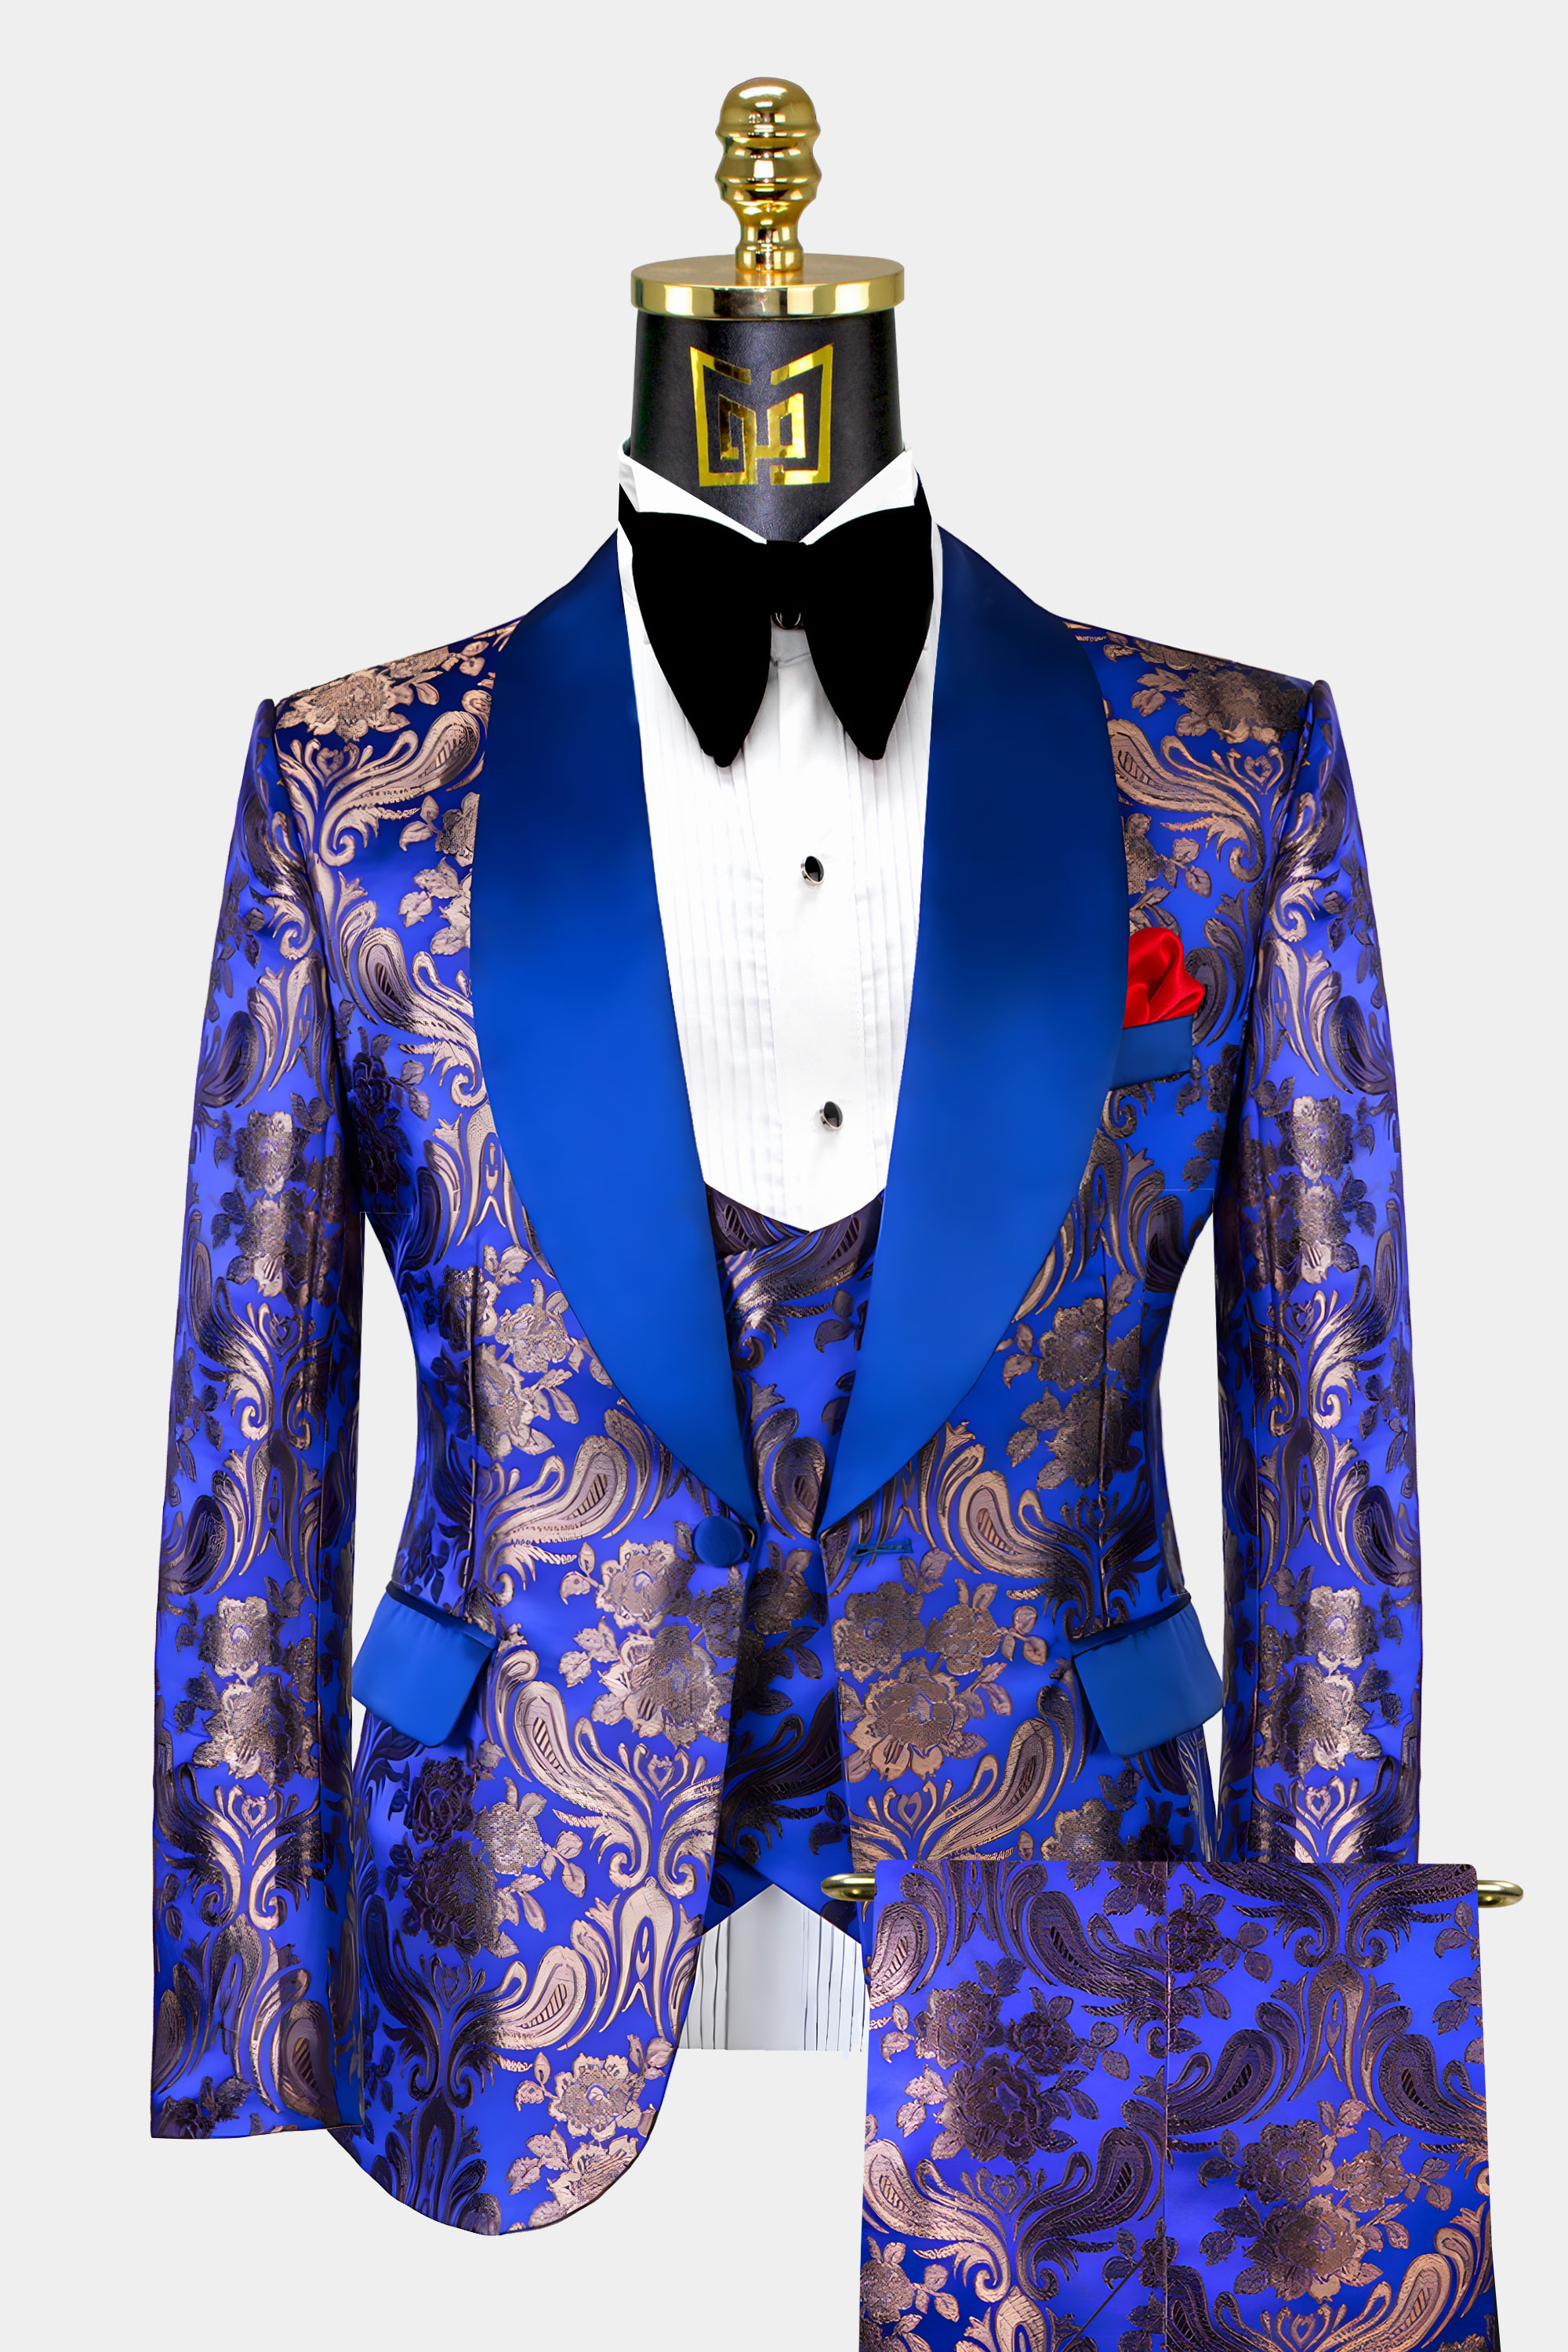 Mens-Royal-Blue-Tuxedo-Groom-Wedding-Prom-Suit-from-Gentlemans-Guru.com